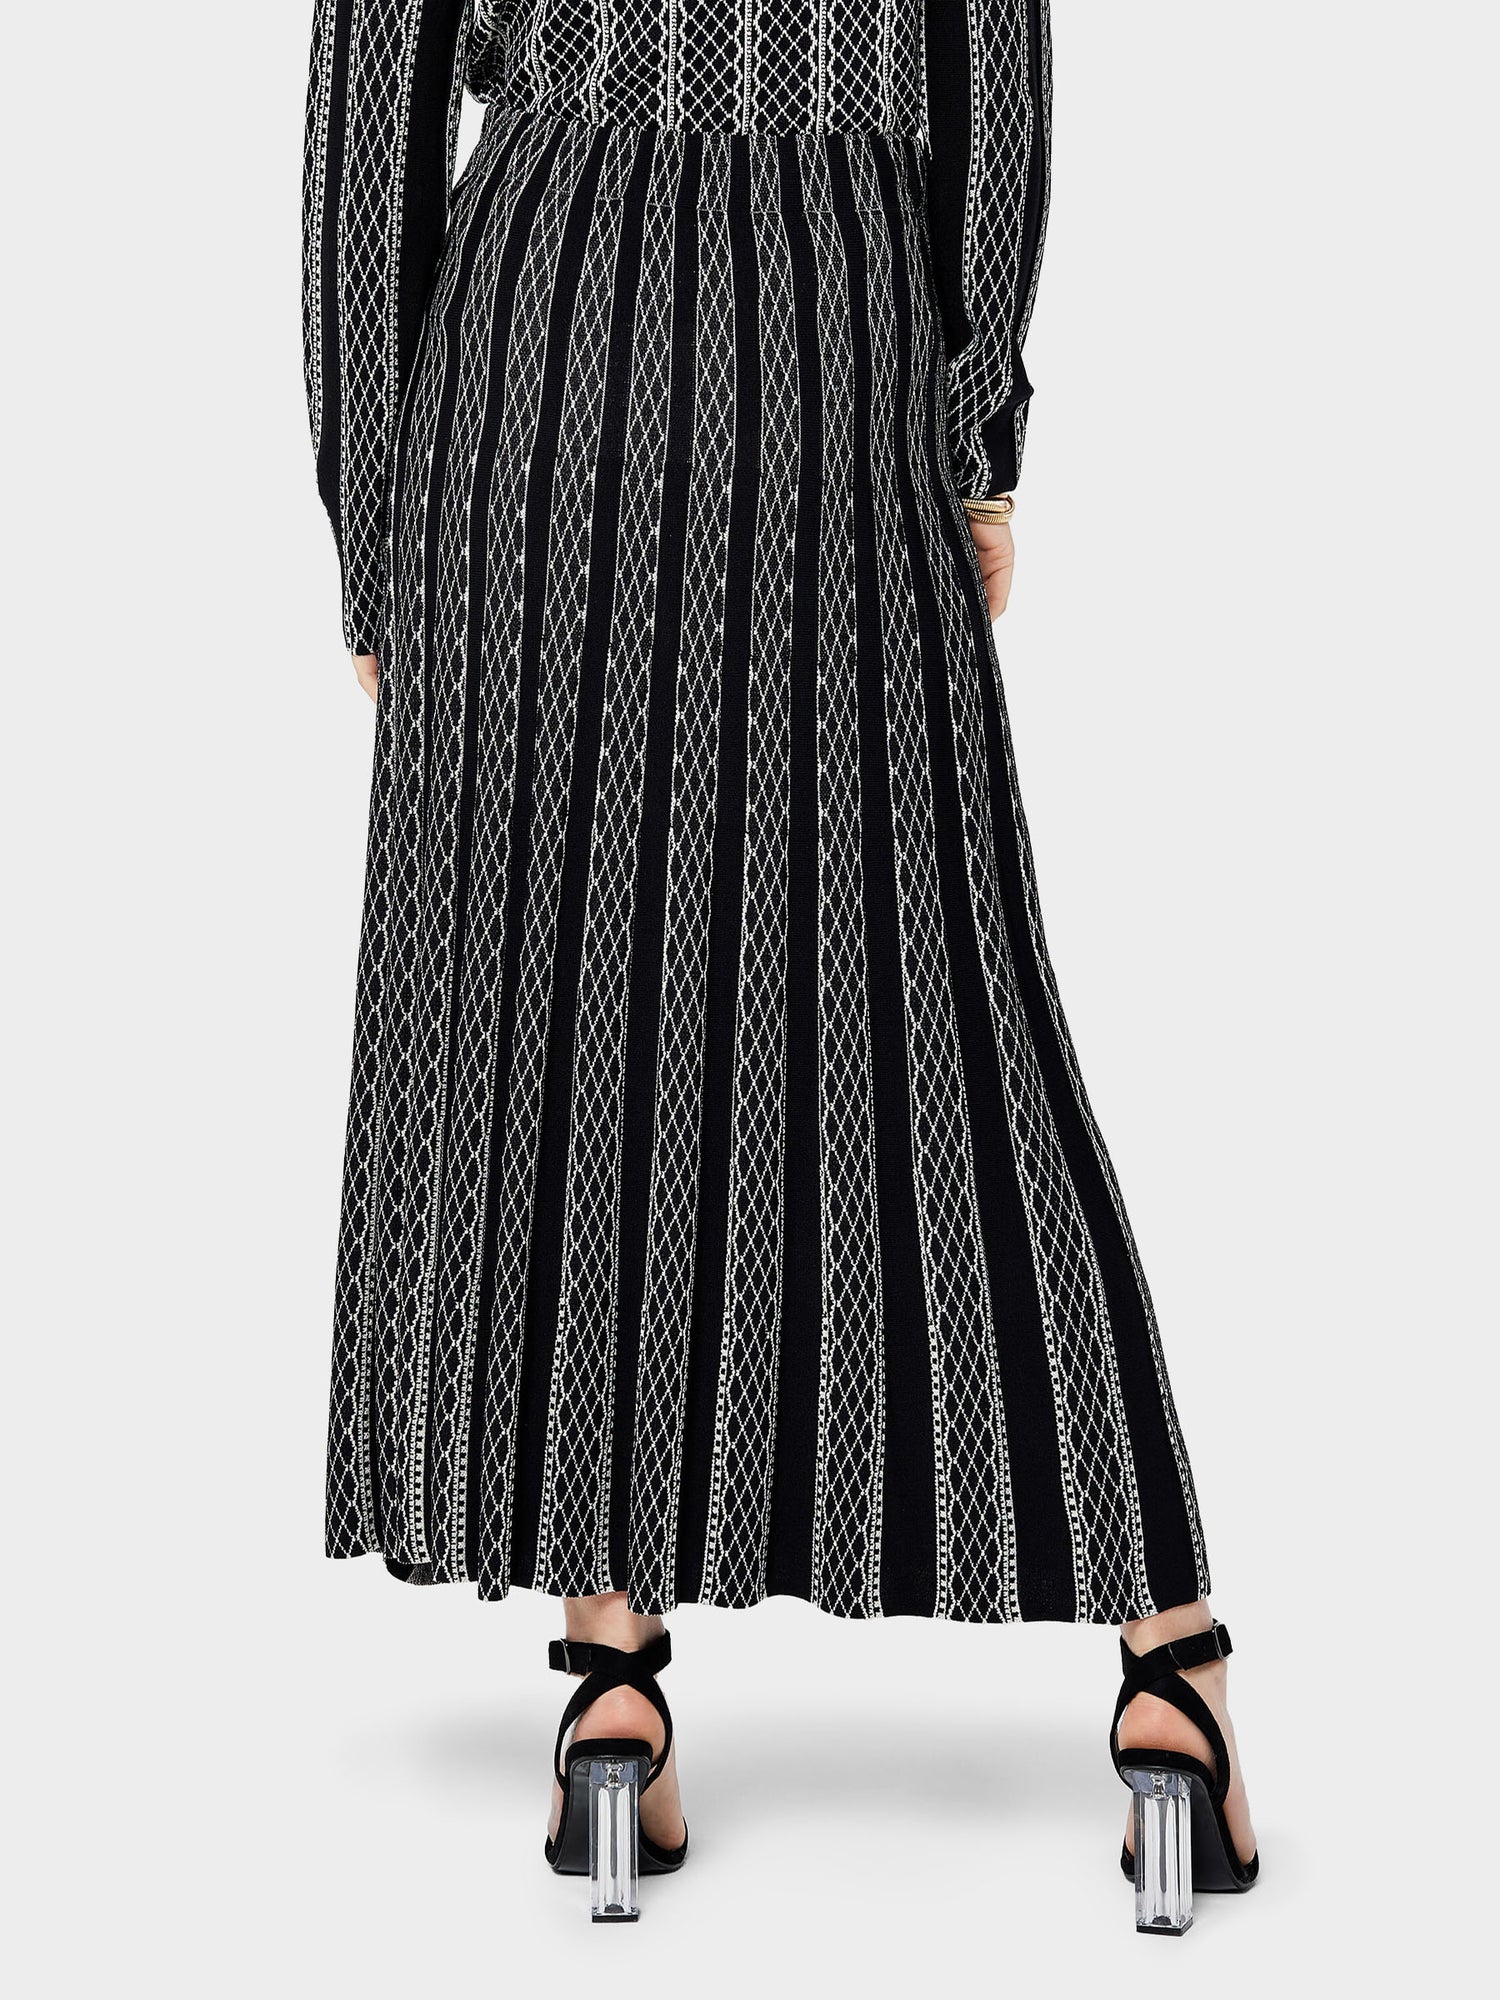 Sienna Knitted Skirt